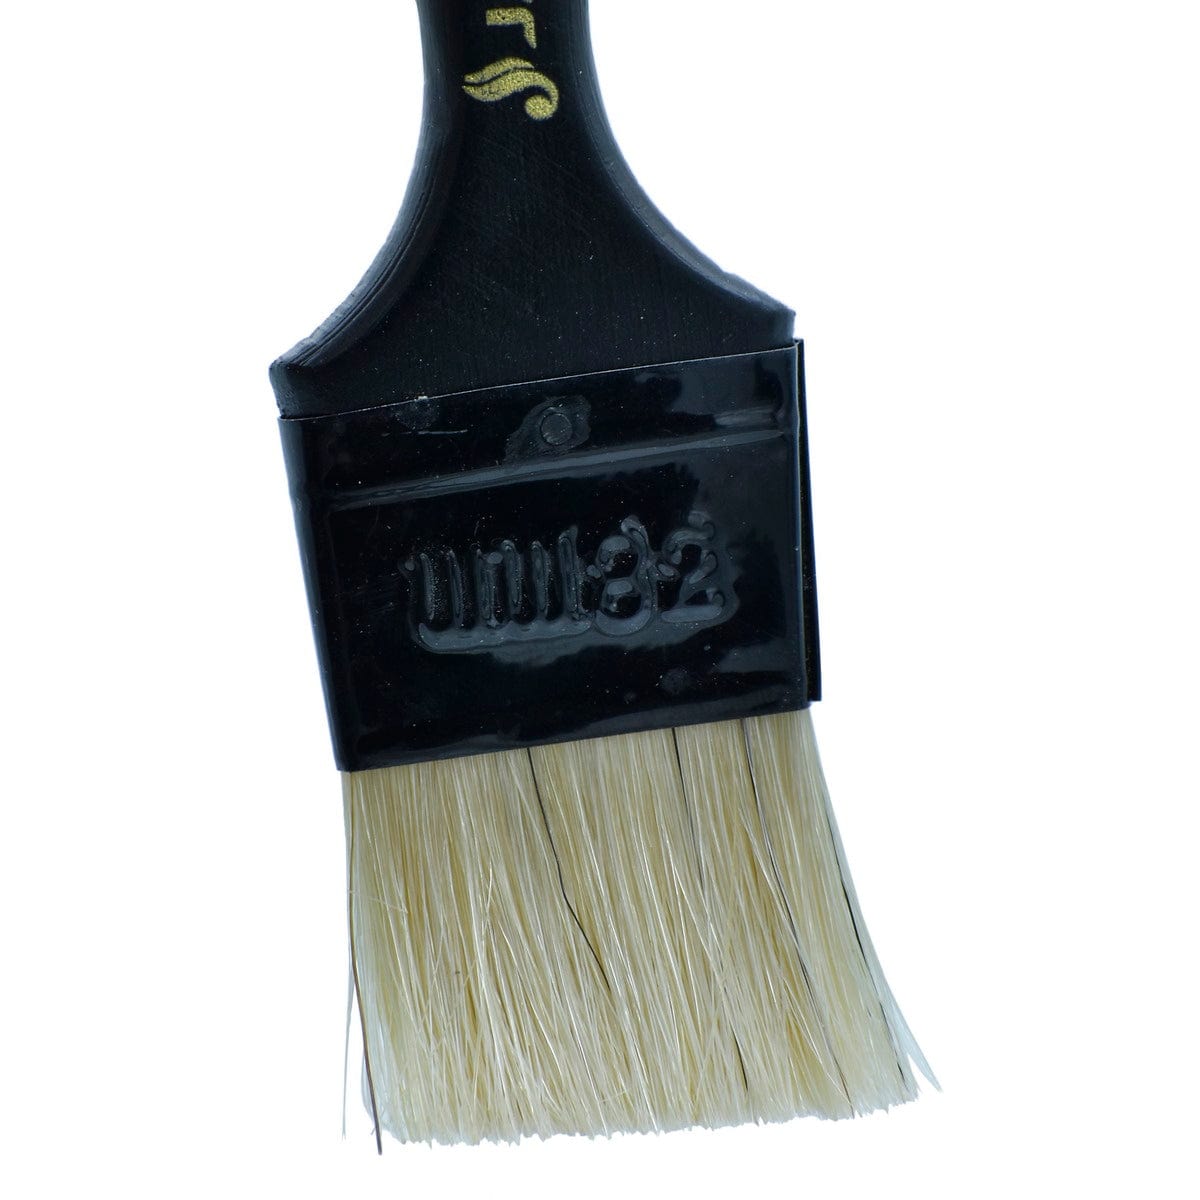 jags-mumbai Tools Jags Wash Brush Hog Bristle Black Handle 38MM - Powerful Cleaning Tool for Heavy-Duty Tasks